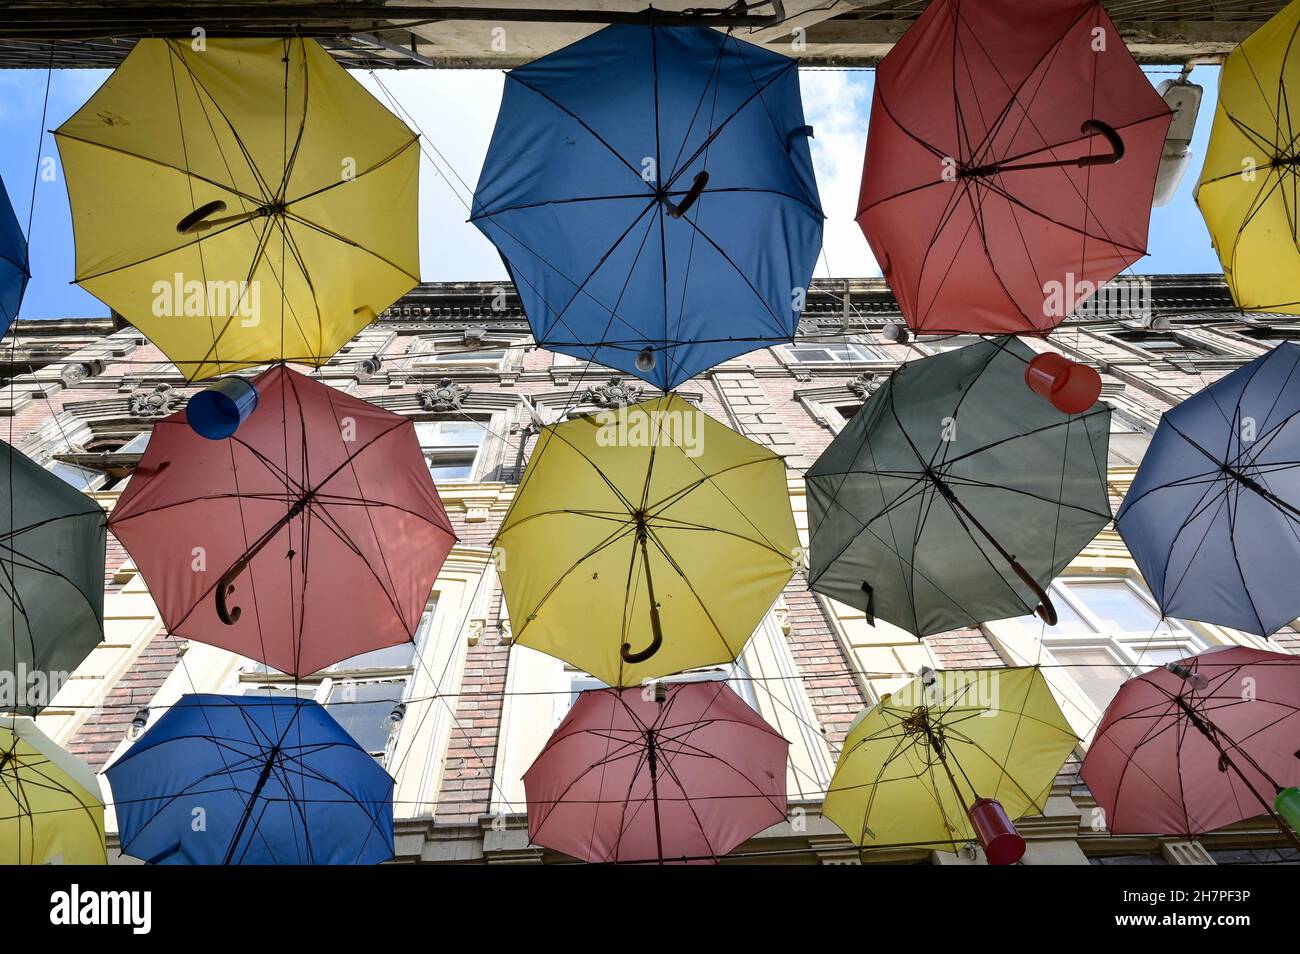 TURCHIA, Istanbul, Karaköy, decorazione ristorante con ombrelloni / Türkei, Istanbul, Stadtteil Karaköy, Ristorante Deko mit Regenschirmen Foto Stock